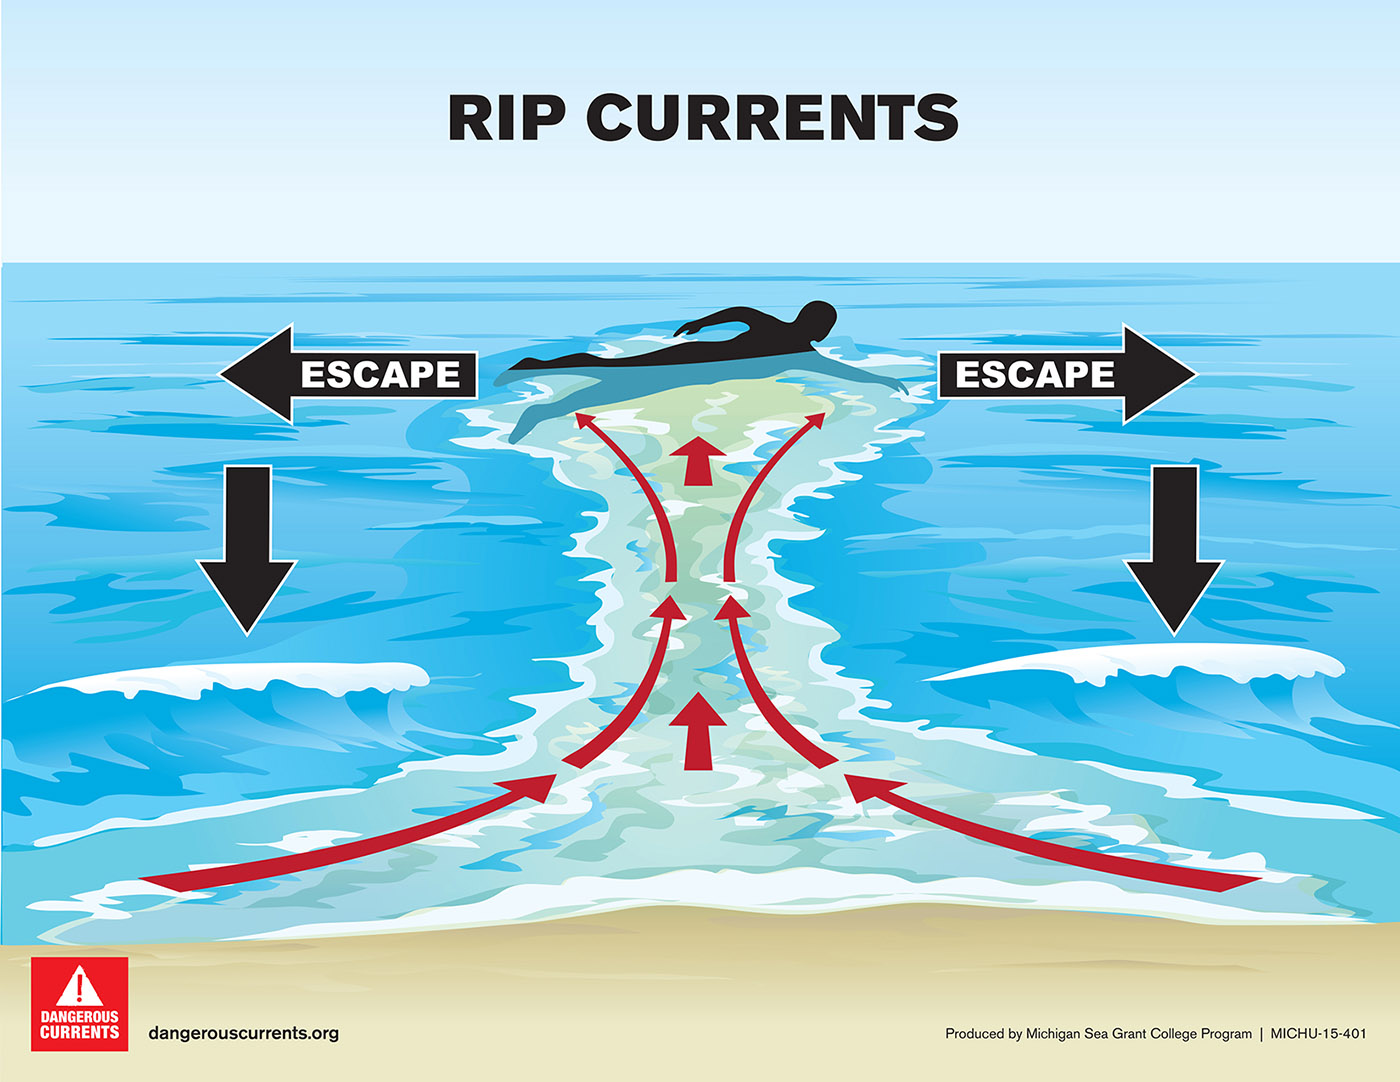 Currents waves tides surviving rips phuket longshore noaa morir maneras ssi ripcurrent oceanservice kumd brigantinenow action